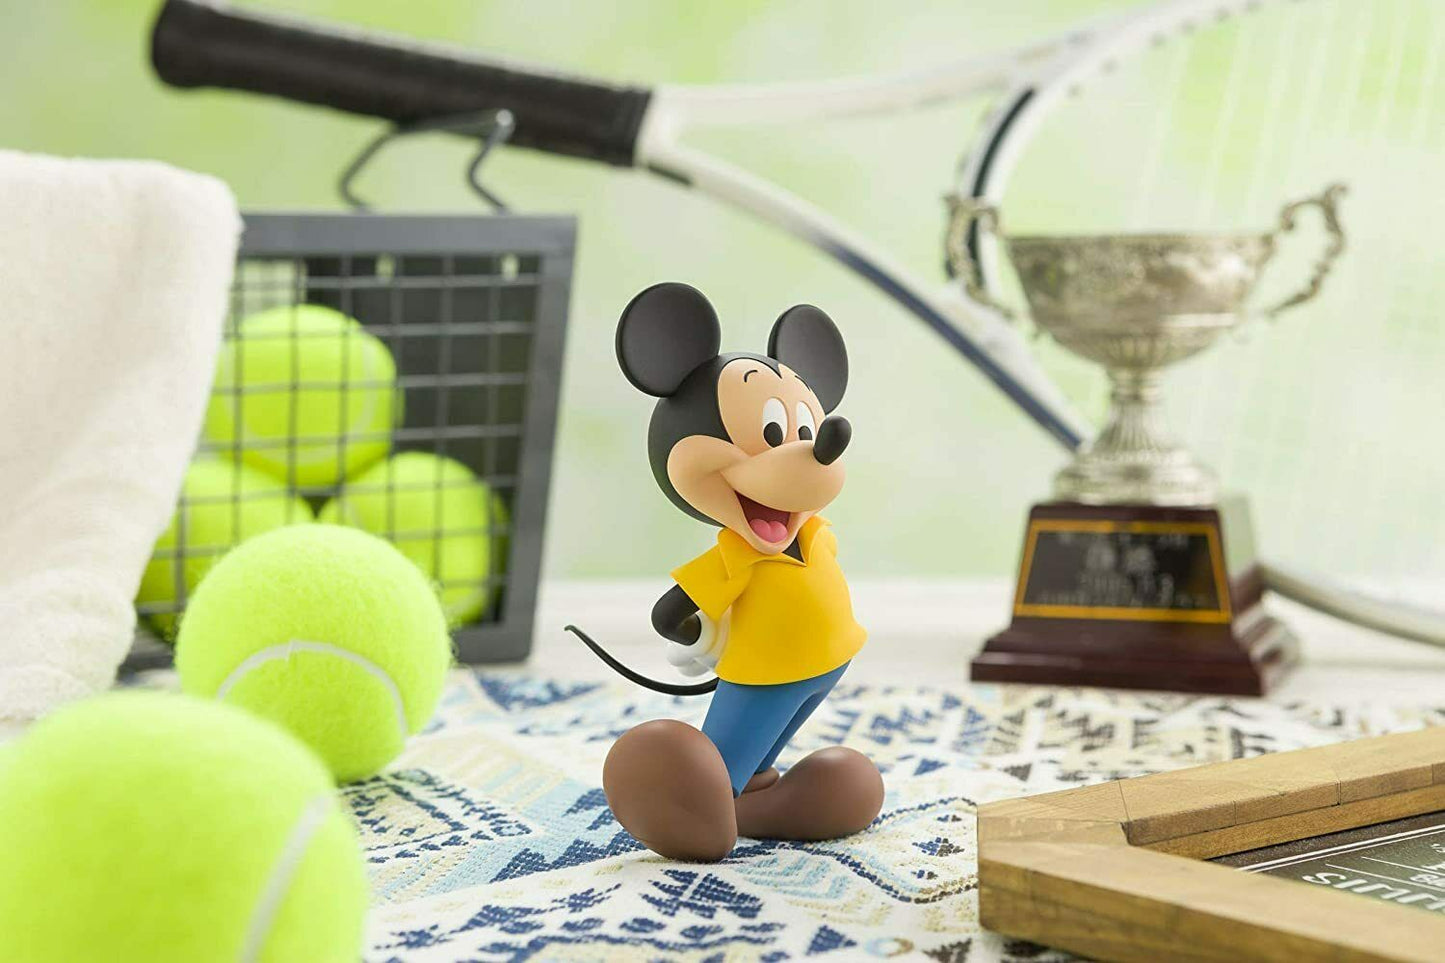 Figuarts Zero Mickey Mouse 1980´s 90th Anniversary Limited Edition Disney